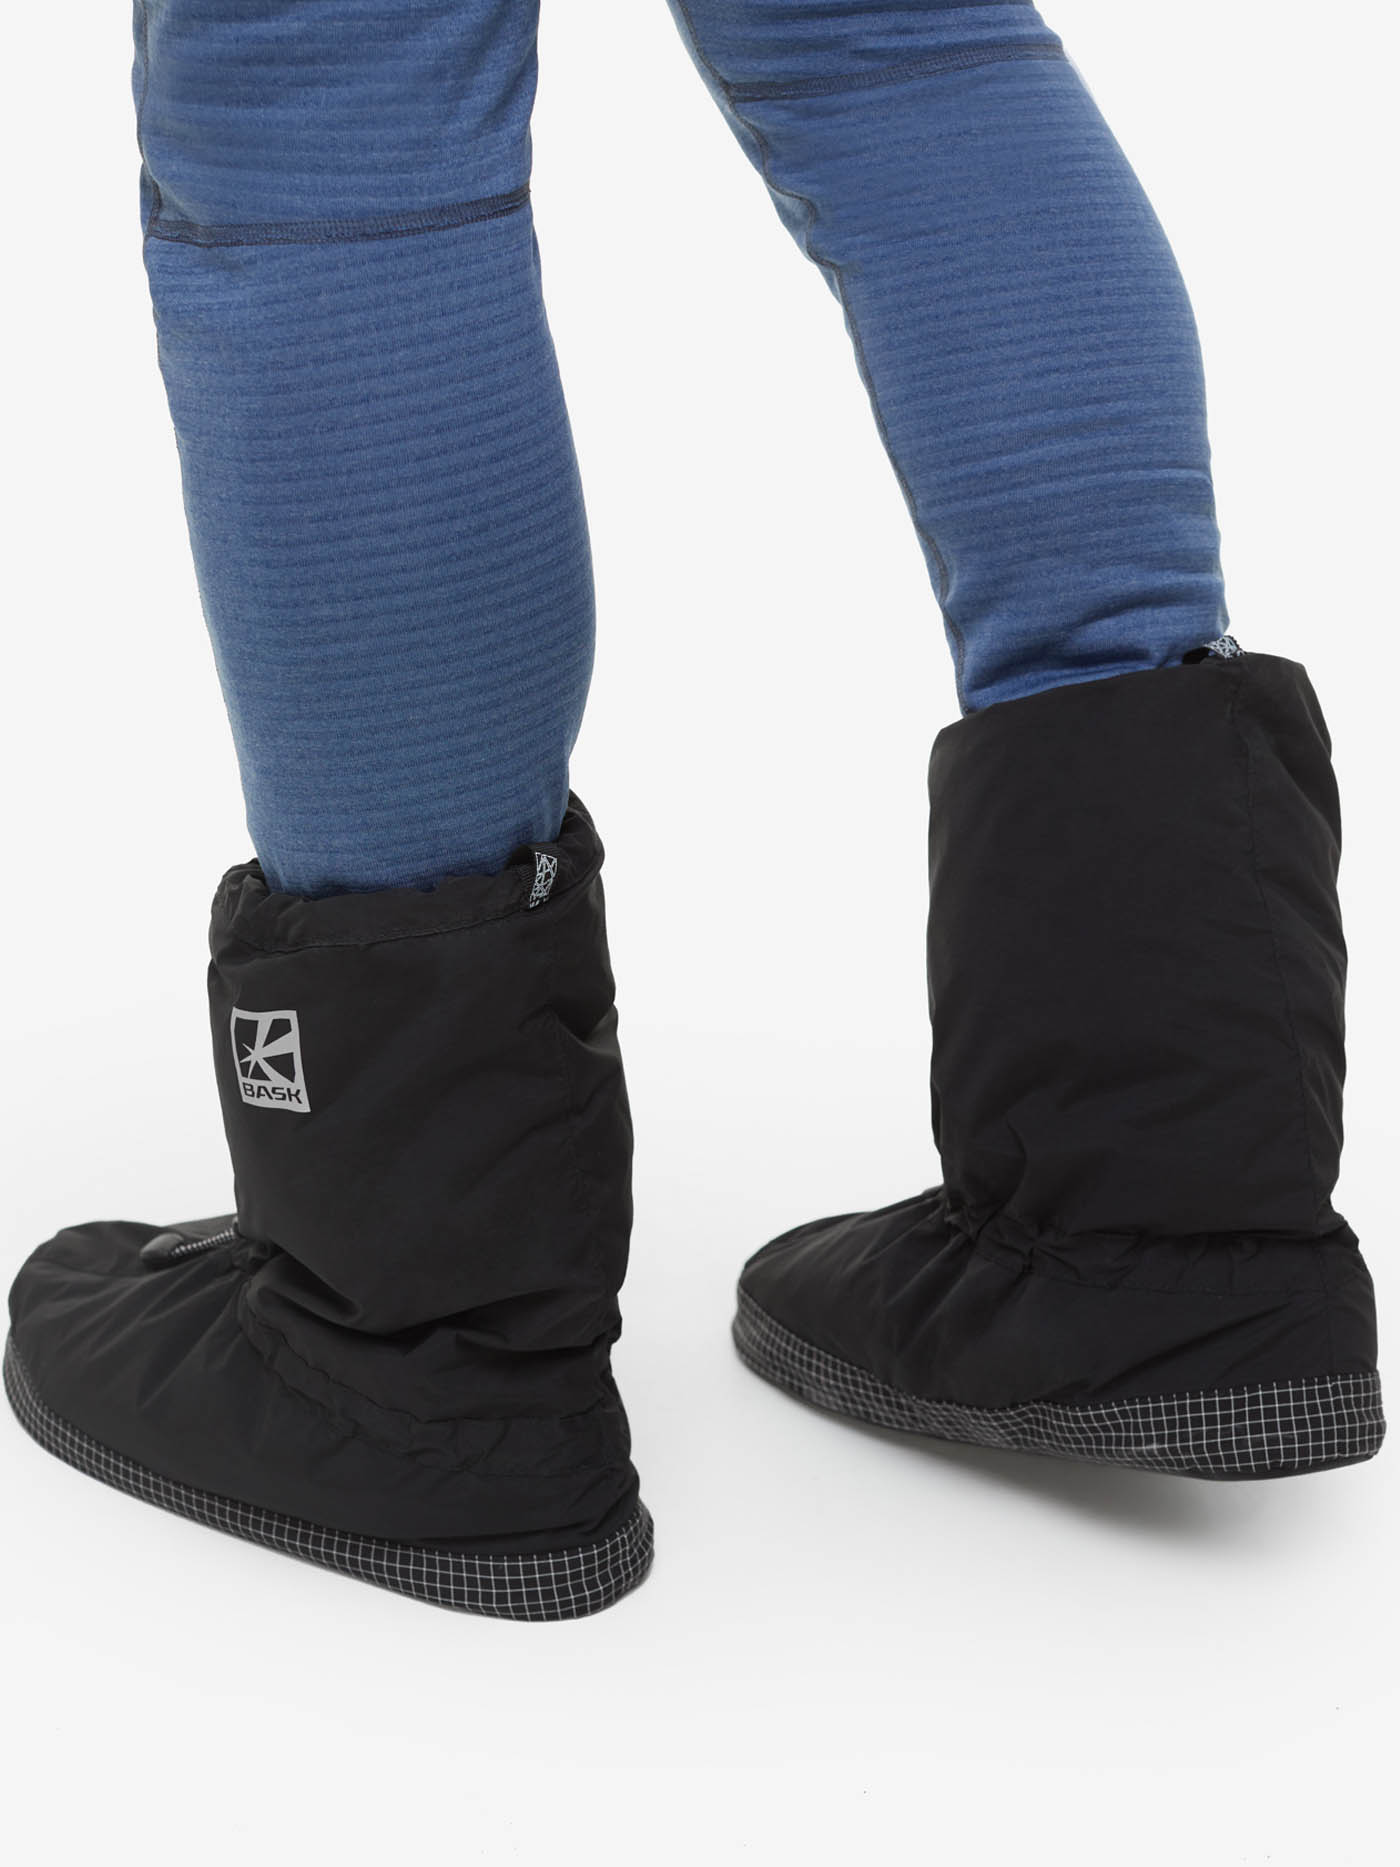 Носки BASK, размер XL, цвет черный 21202-9009-XL Down foot - фото 3